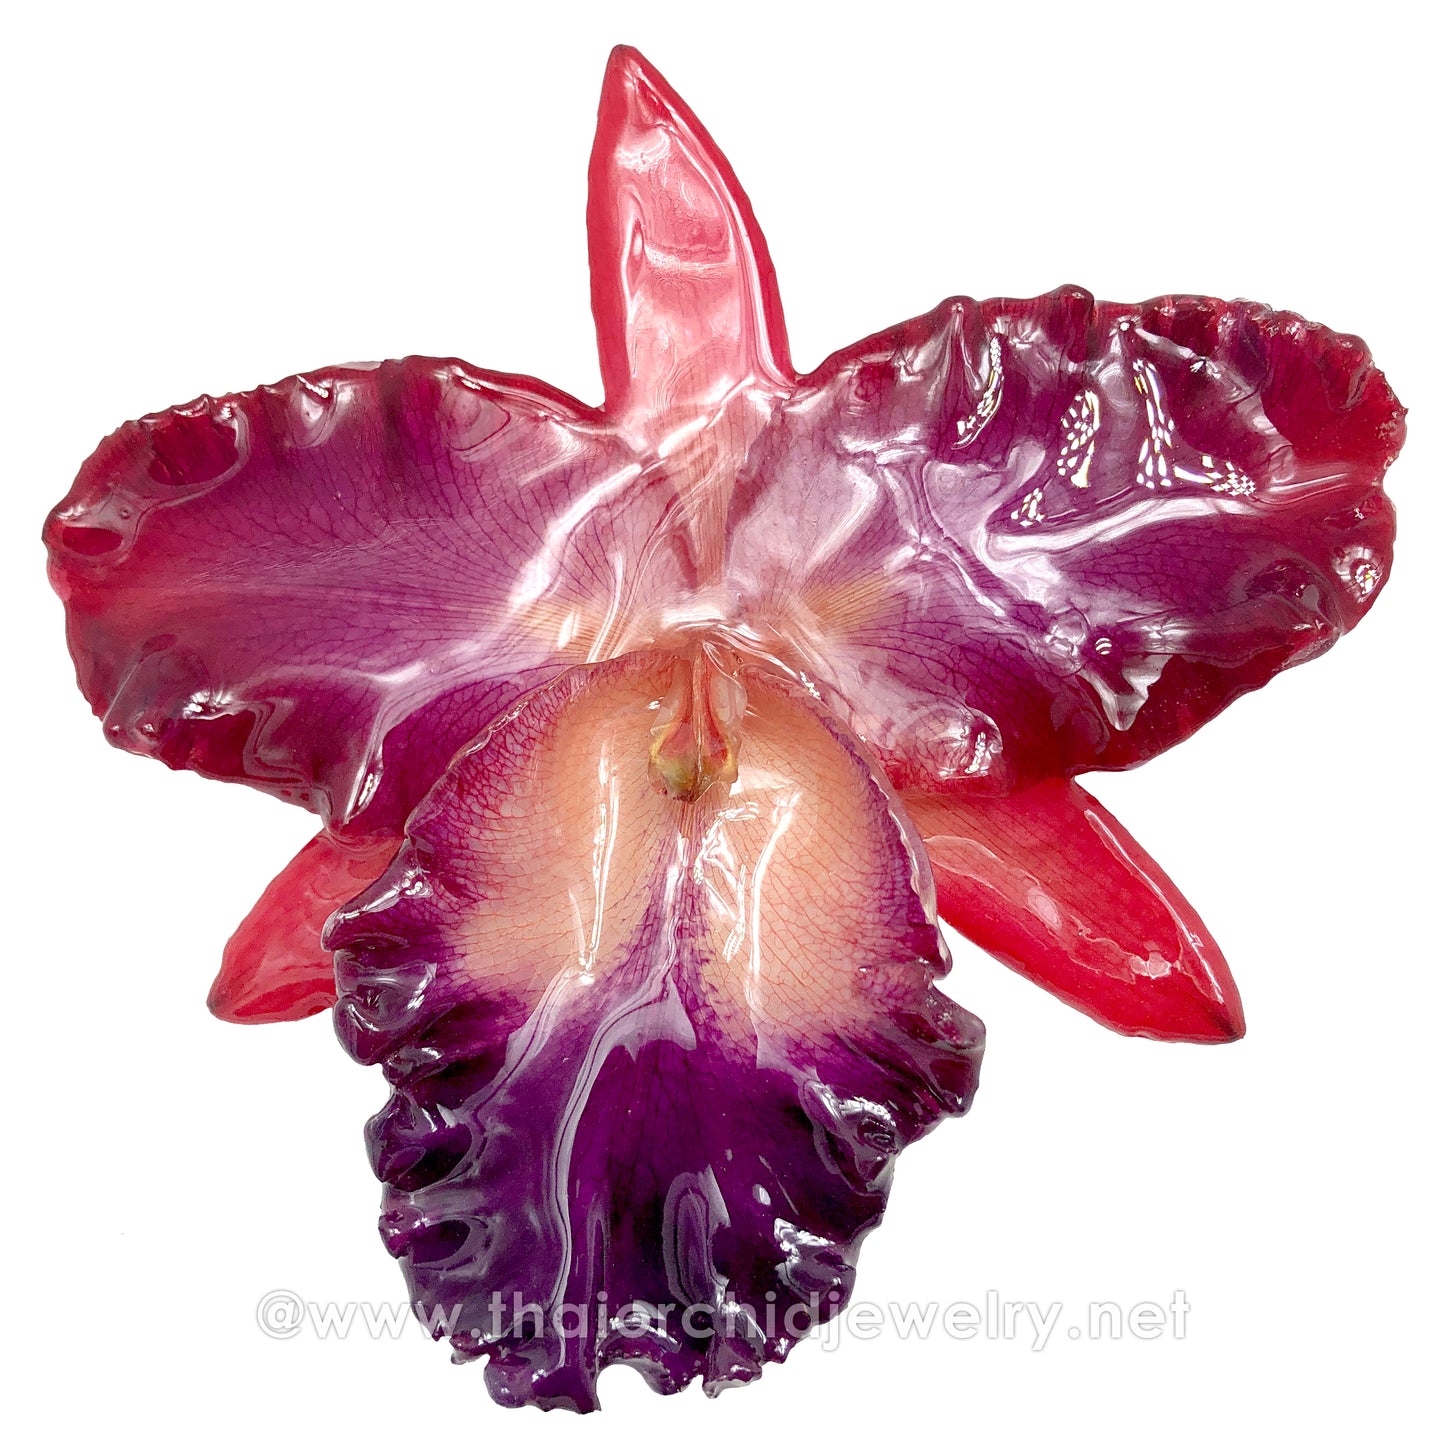 Cattleya Sakura "JUMBO" 5-6 inches Orchid Jewelry Pendant (Deep Red)